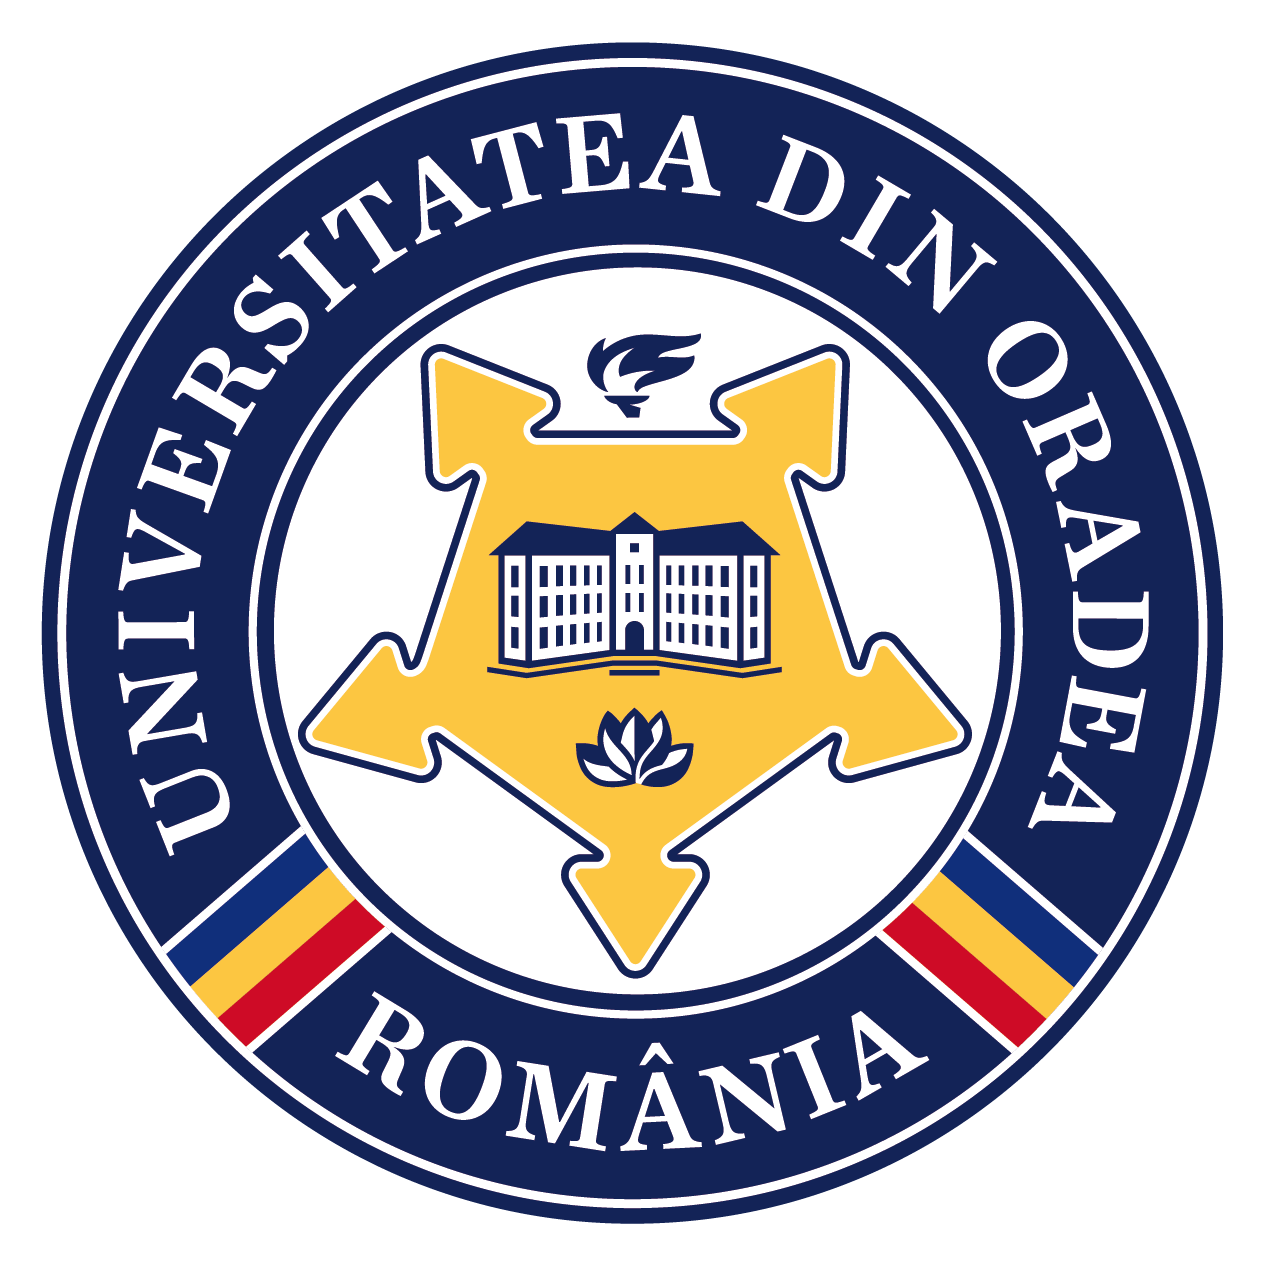 Seal of the University of Oradea